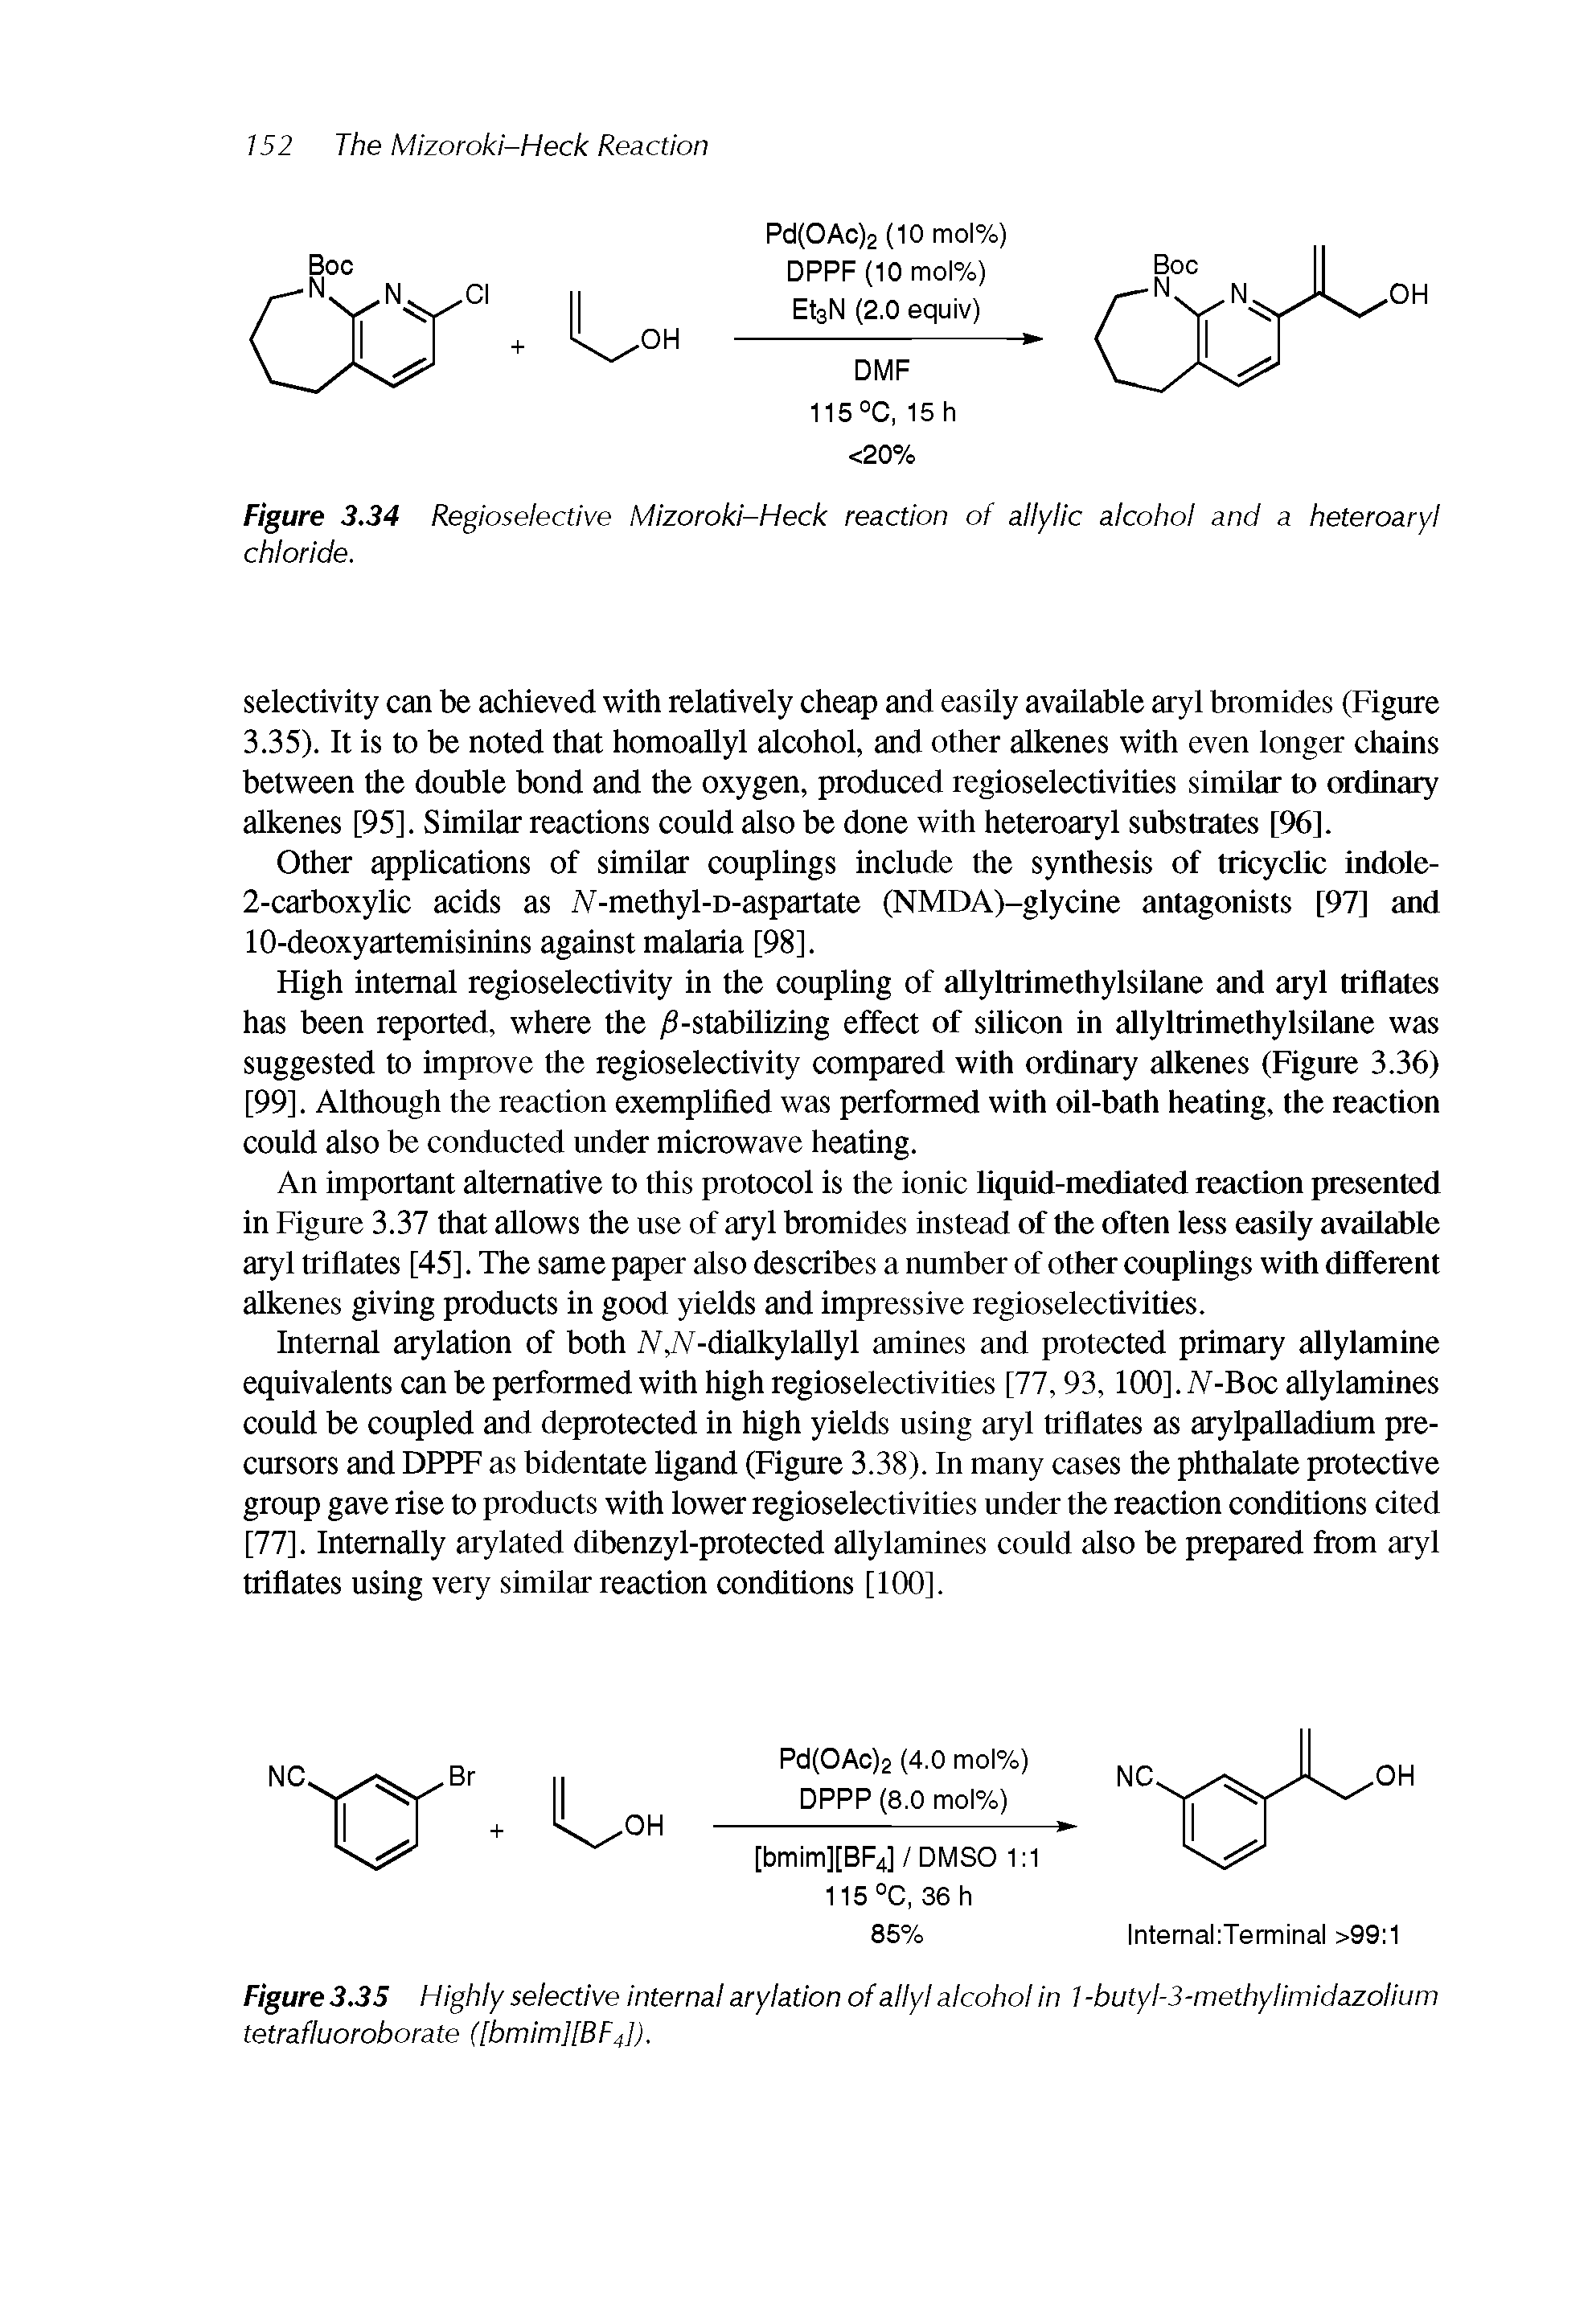 Figure 3.34 Regioselective Mizoroki-Heck reaction of aiiyiic aicohoi and a heteroaryi chioride.